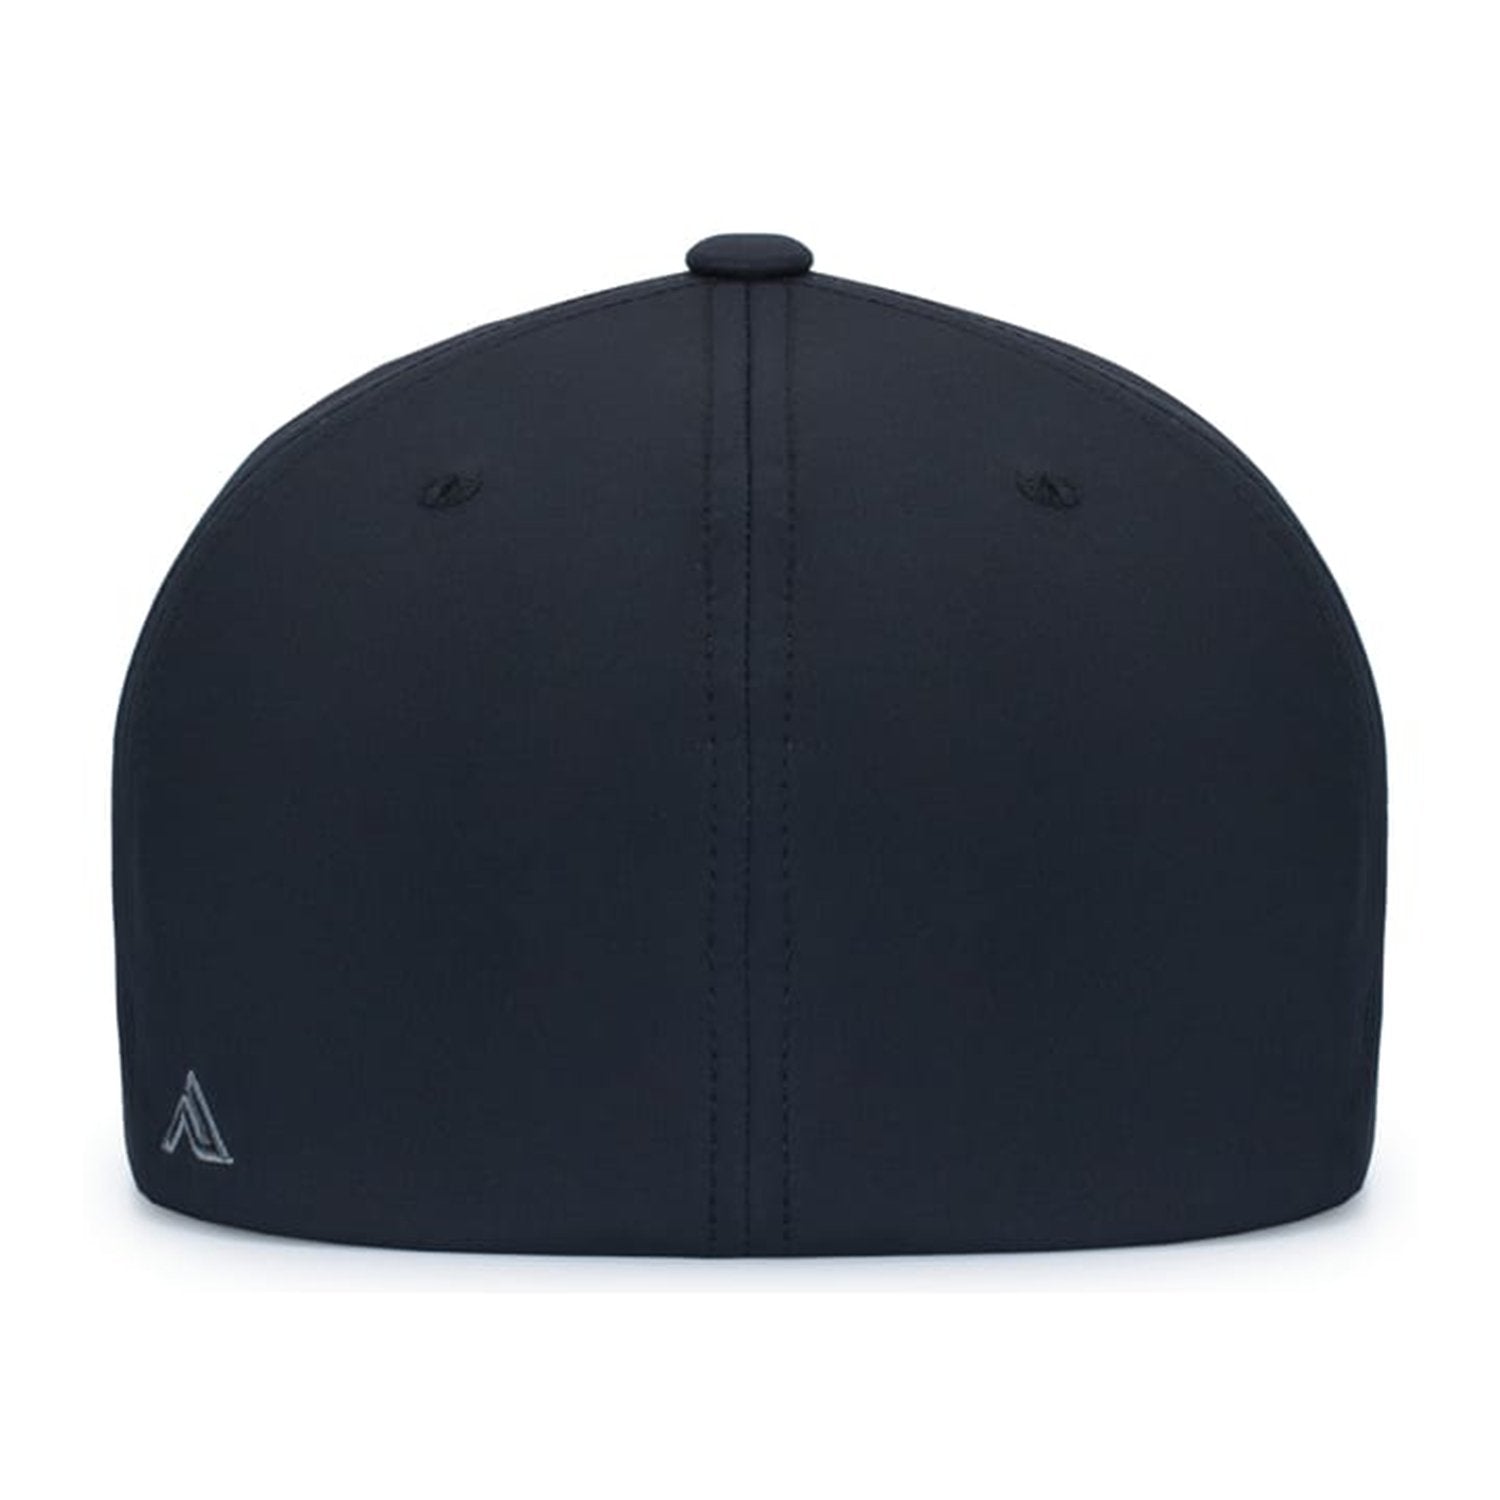 Hardwood Basketball - Flex Fit Premium Hat - Pacific Headwear Graphite/Black/Black - ES471 - IMS Apparel HardwoodHat-Graphite/Black/Black-L80